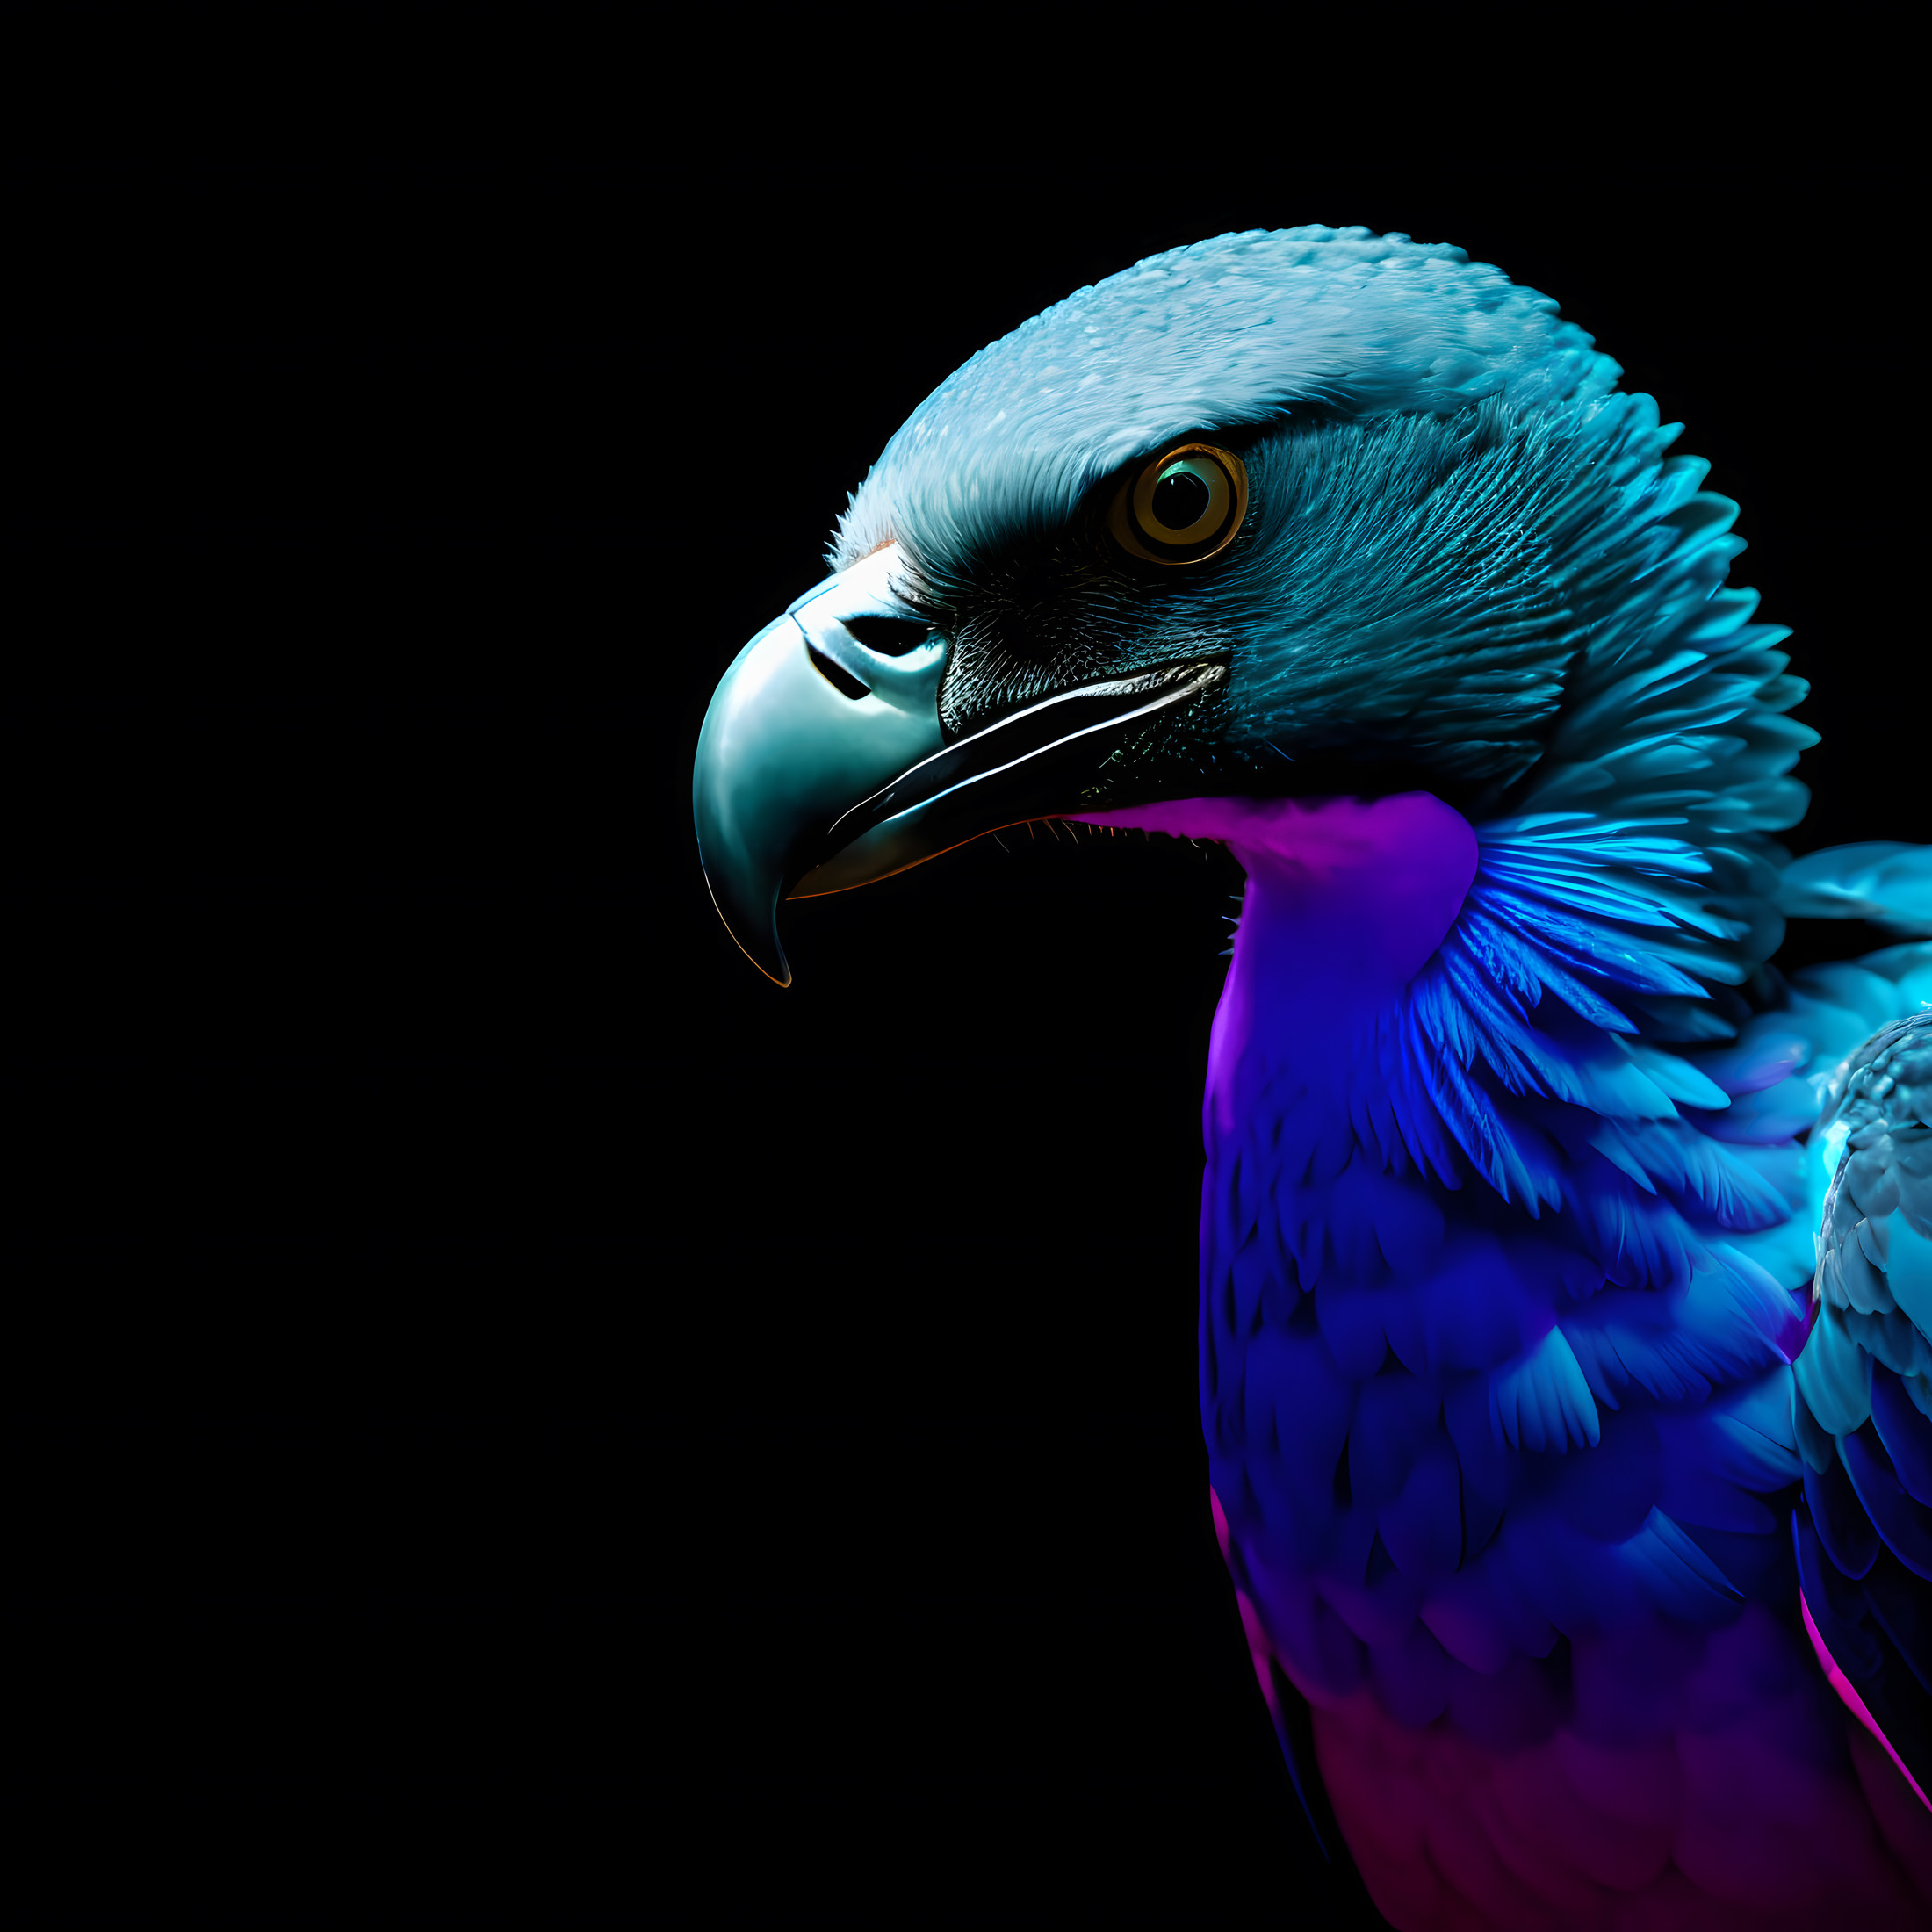 8k uhd, sharp focus, masterpiece, RAW photo, high quality, highres,
vulture bioluminescent purple teal lighting super real...